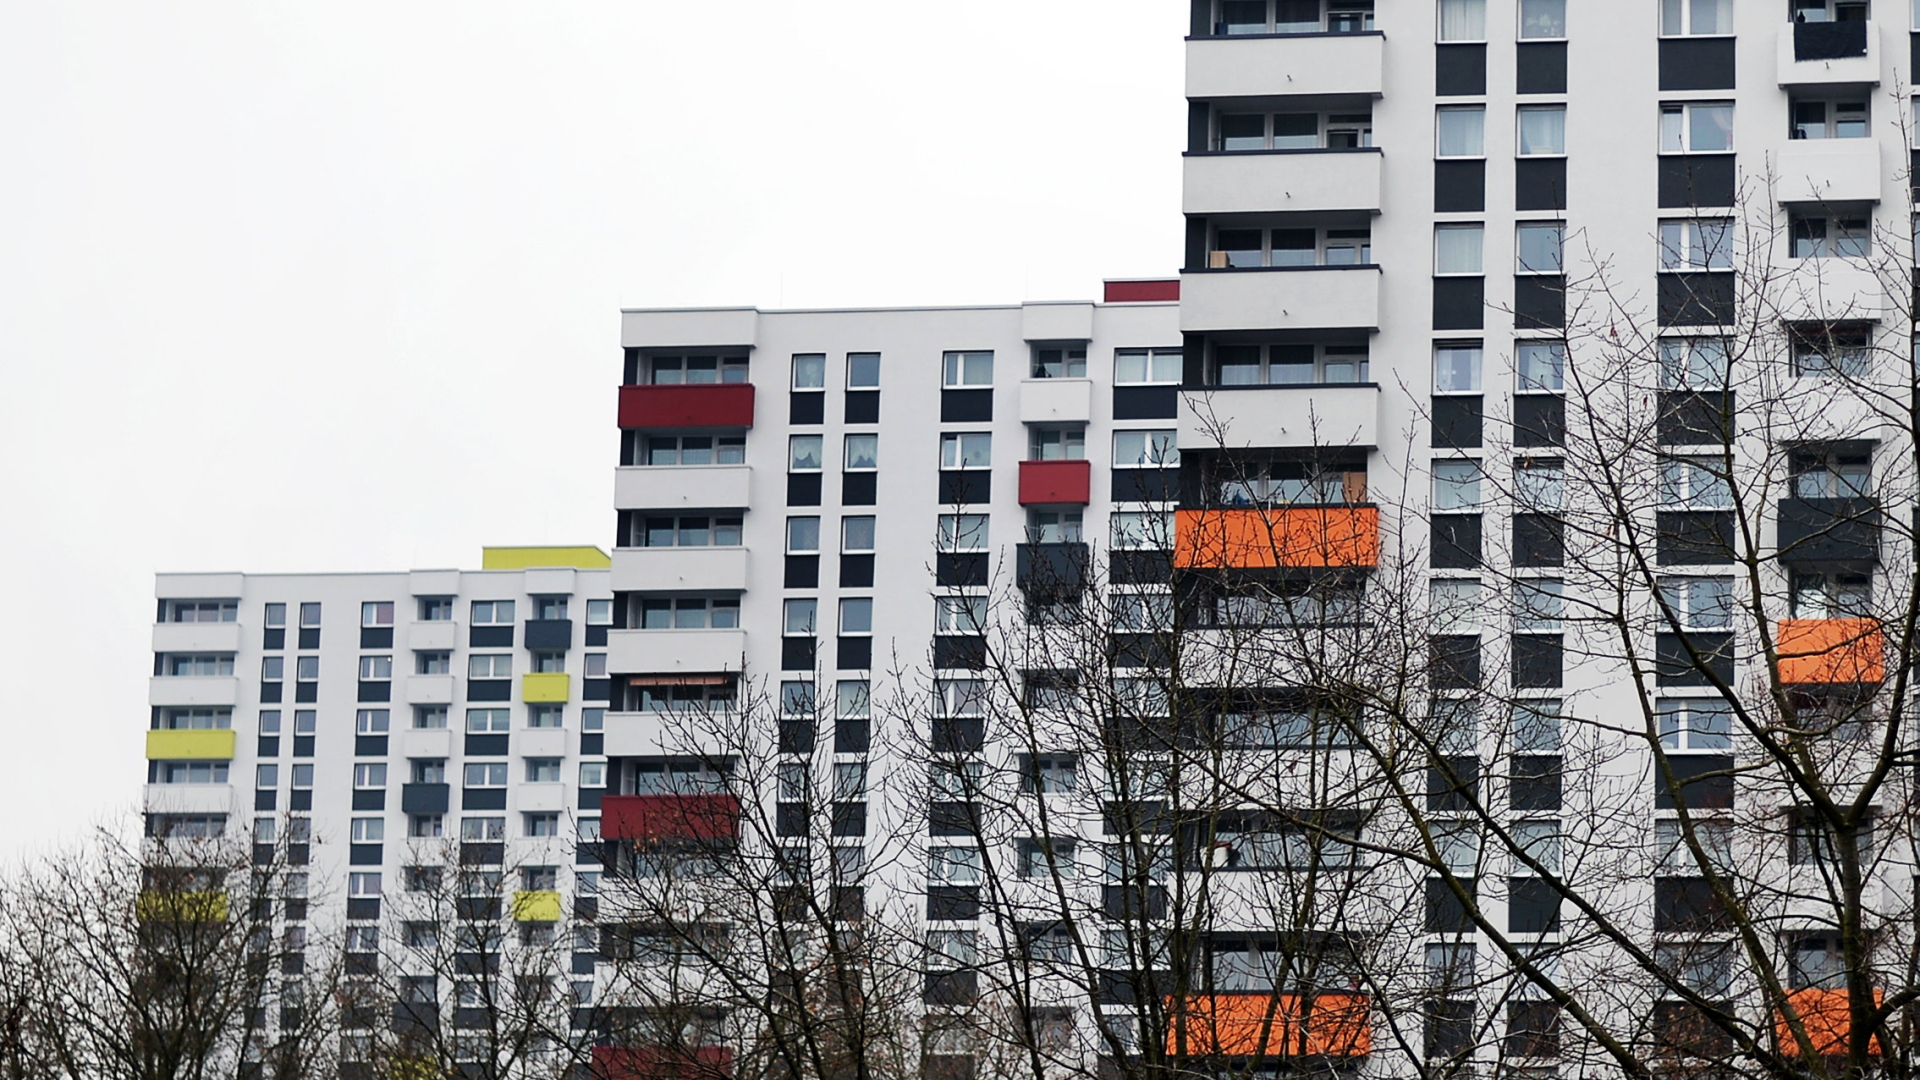 Sozialwohnungen in Frankfurt | dpa